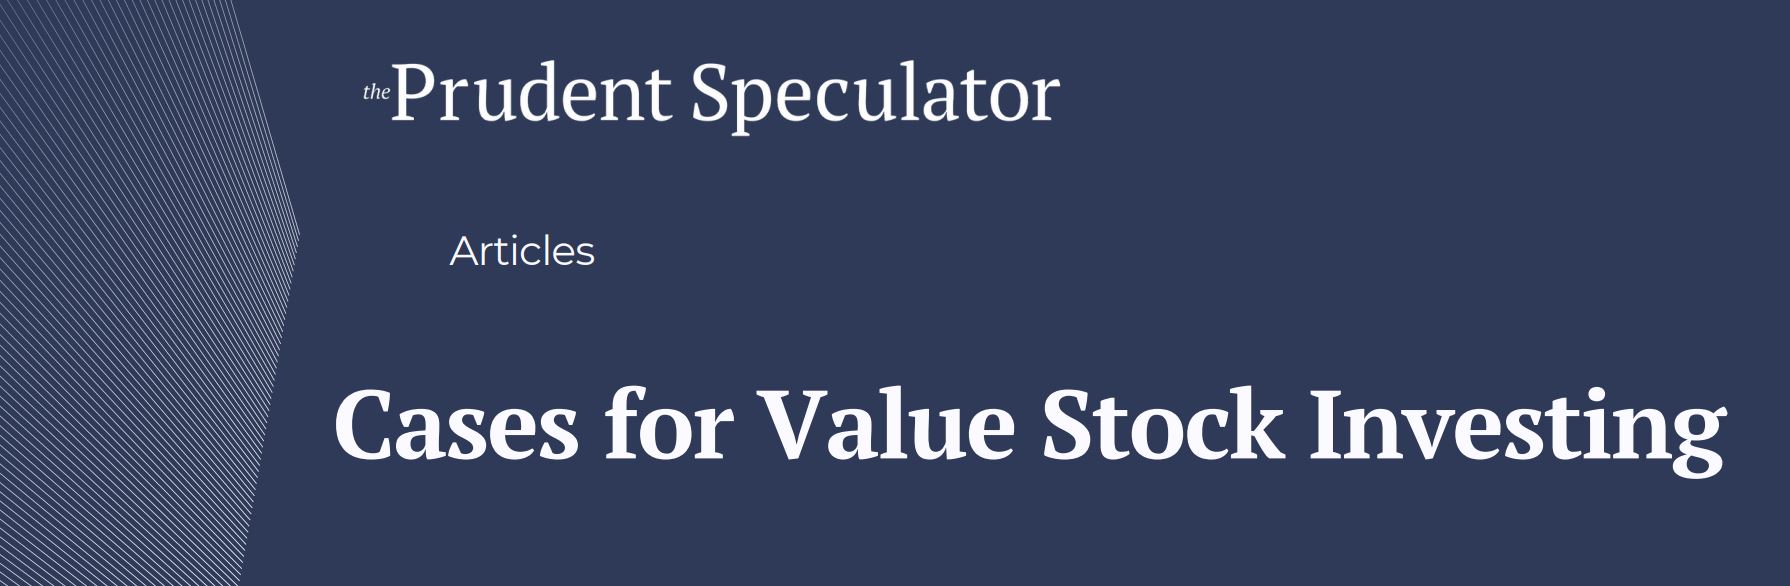 value stocks